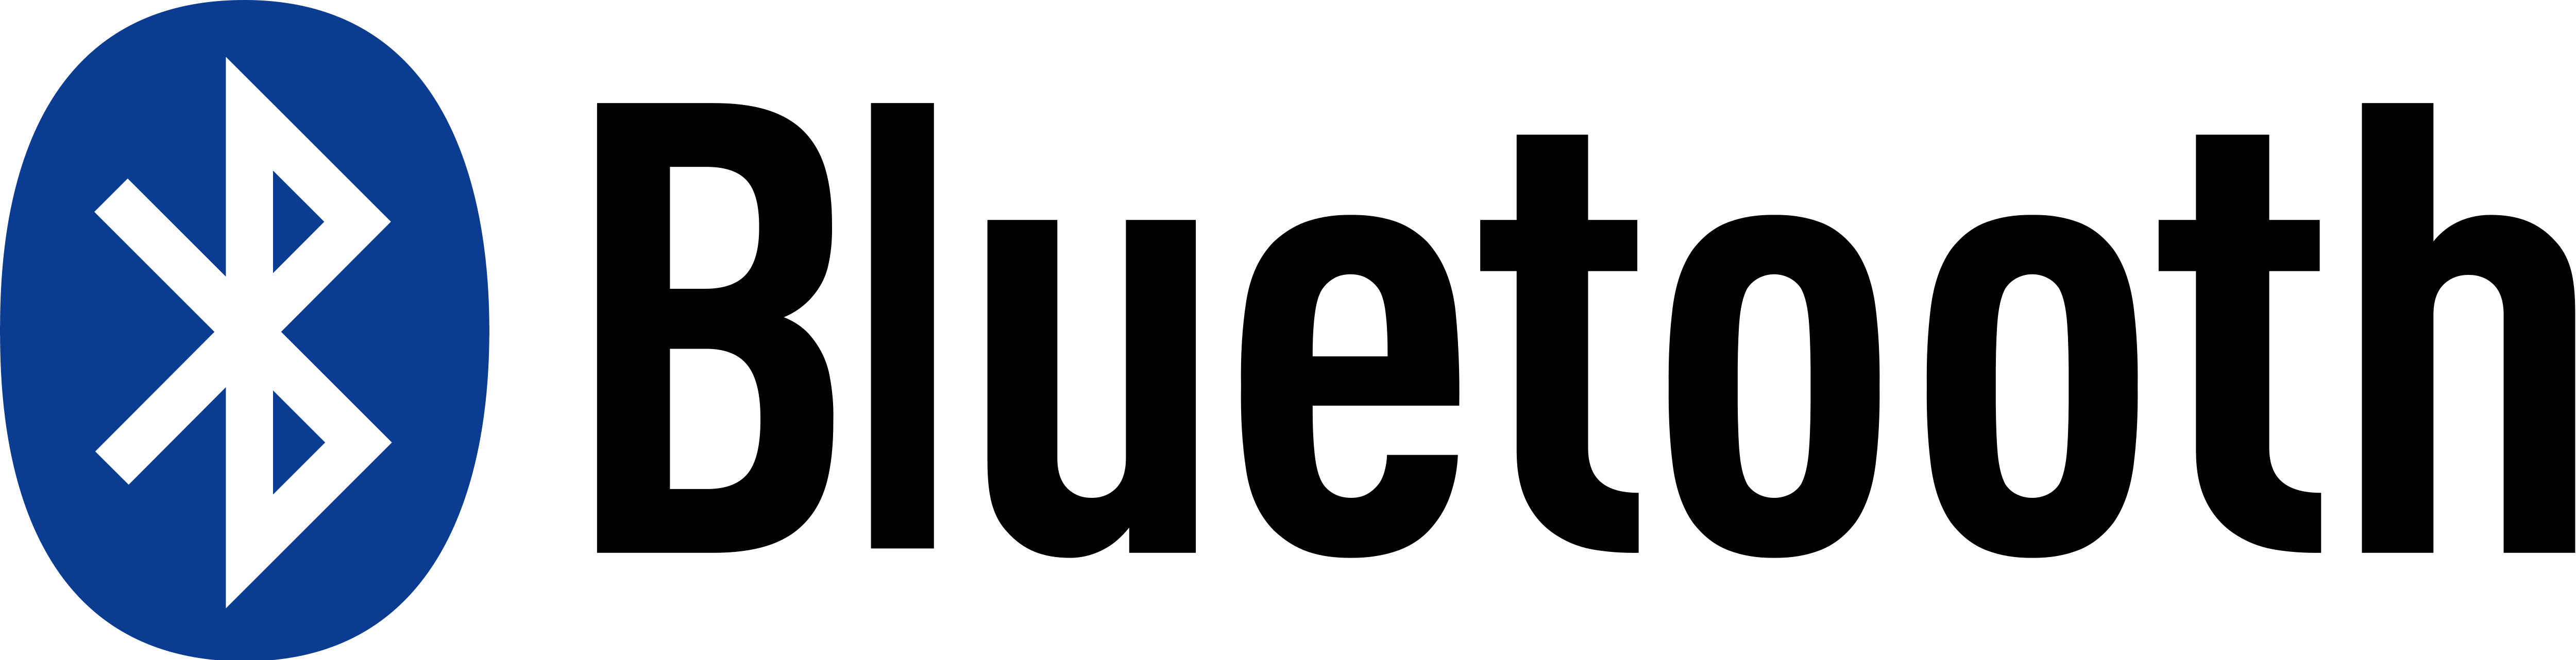 bluetooth logo.